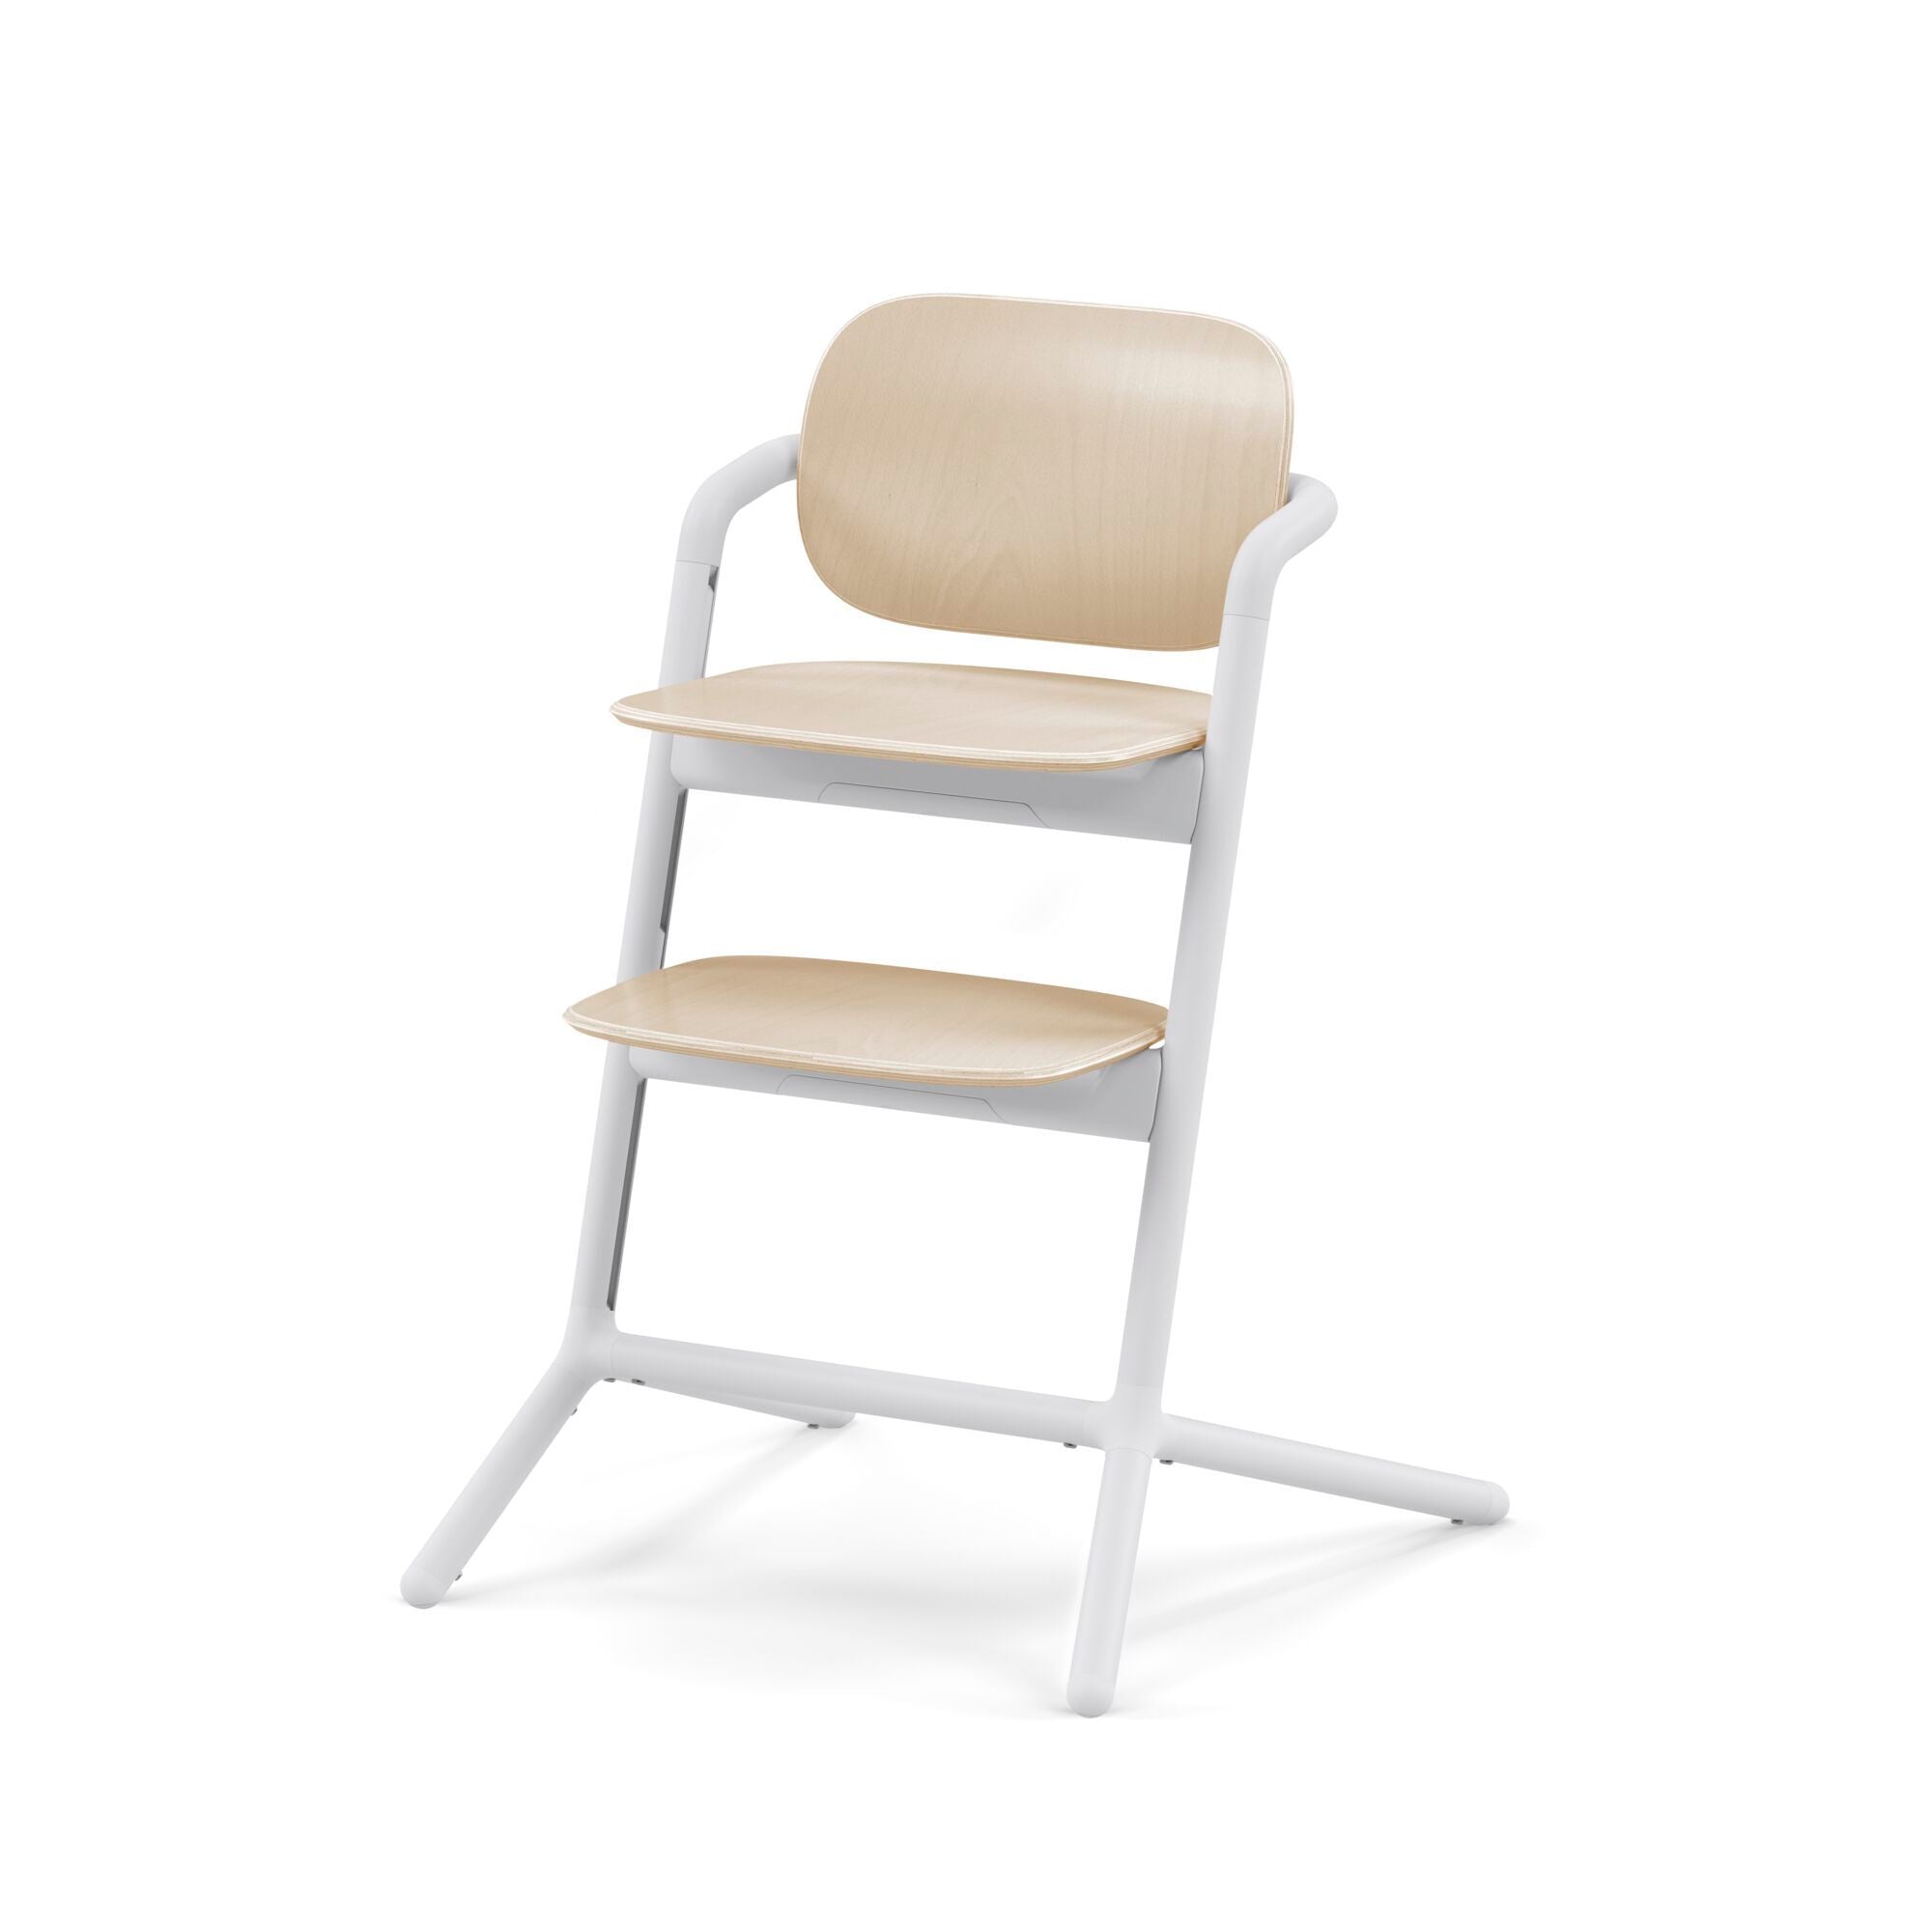 Cybex Lemo 2 High Chair 4-in-1 - ANB Baby -40638462210734 in 1 high chair